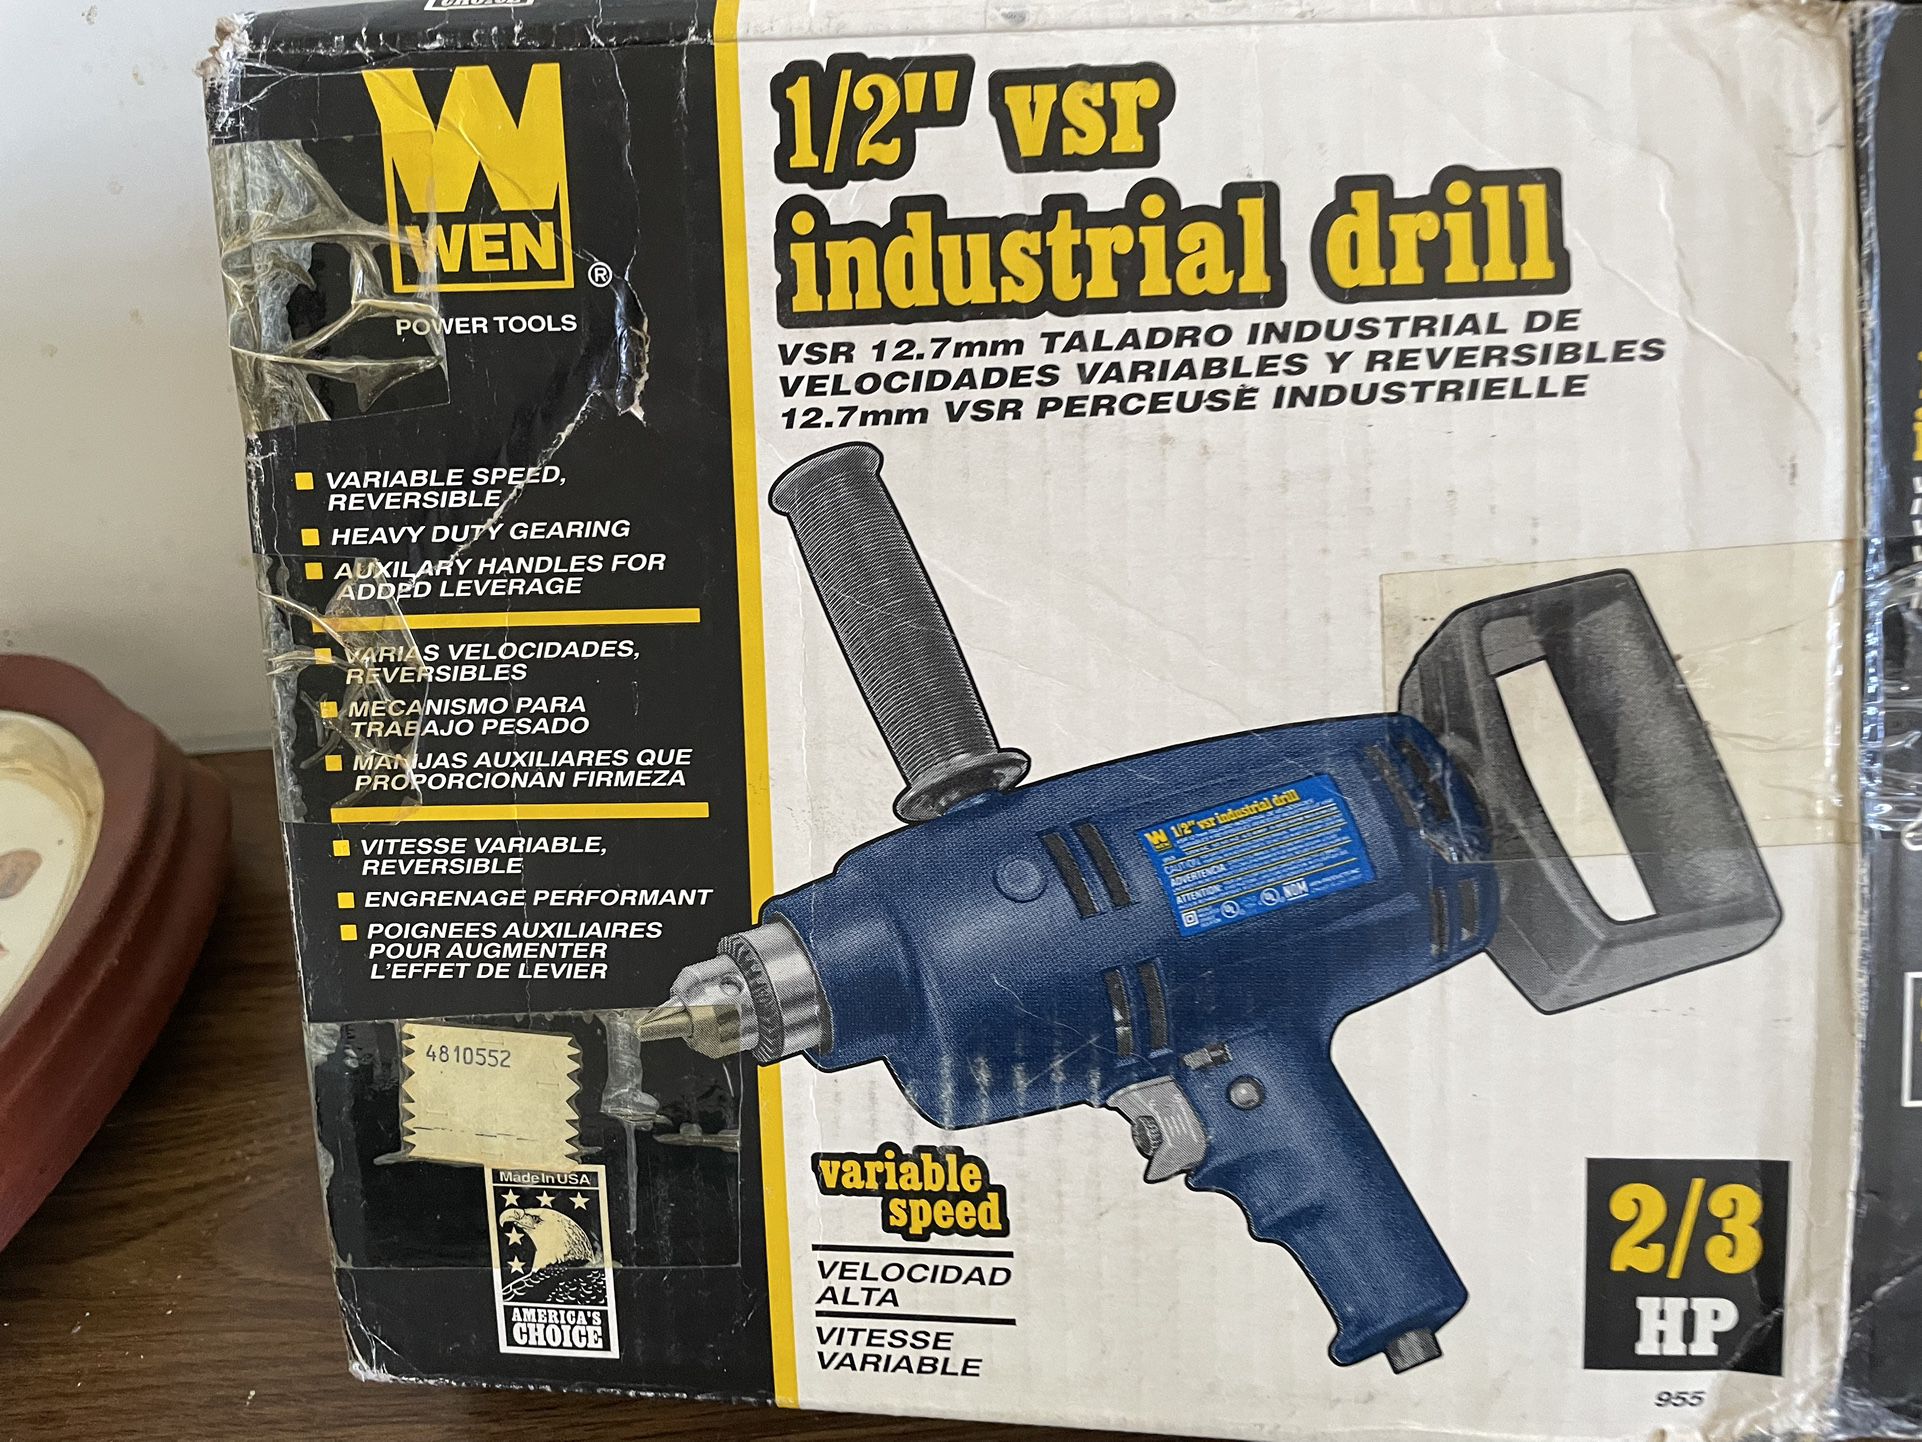 Wen 1/2” Industrial Drill